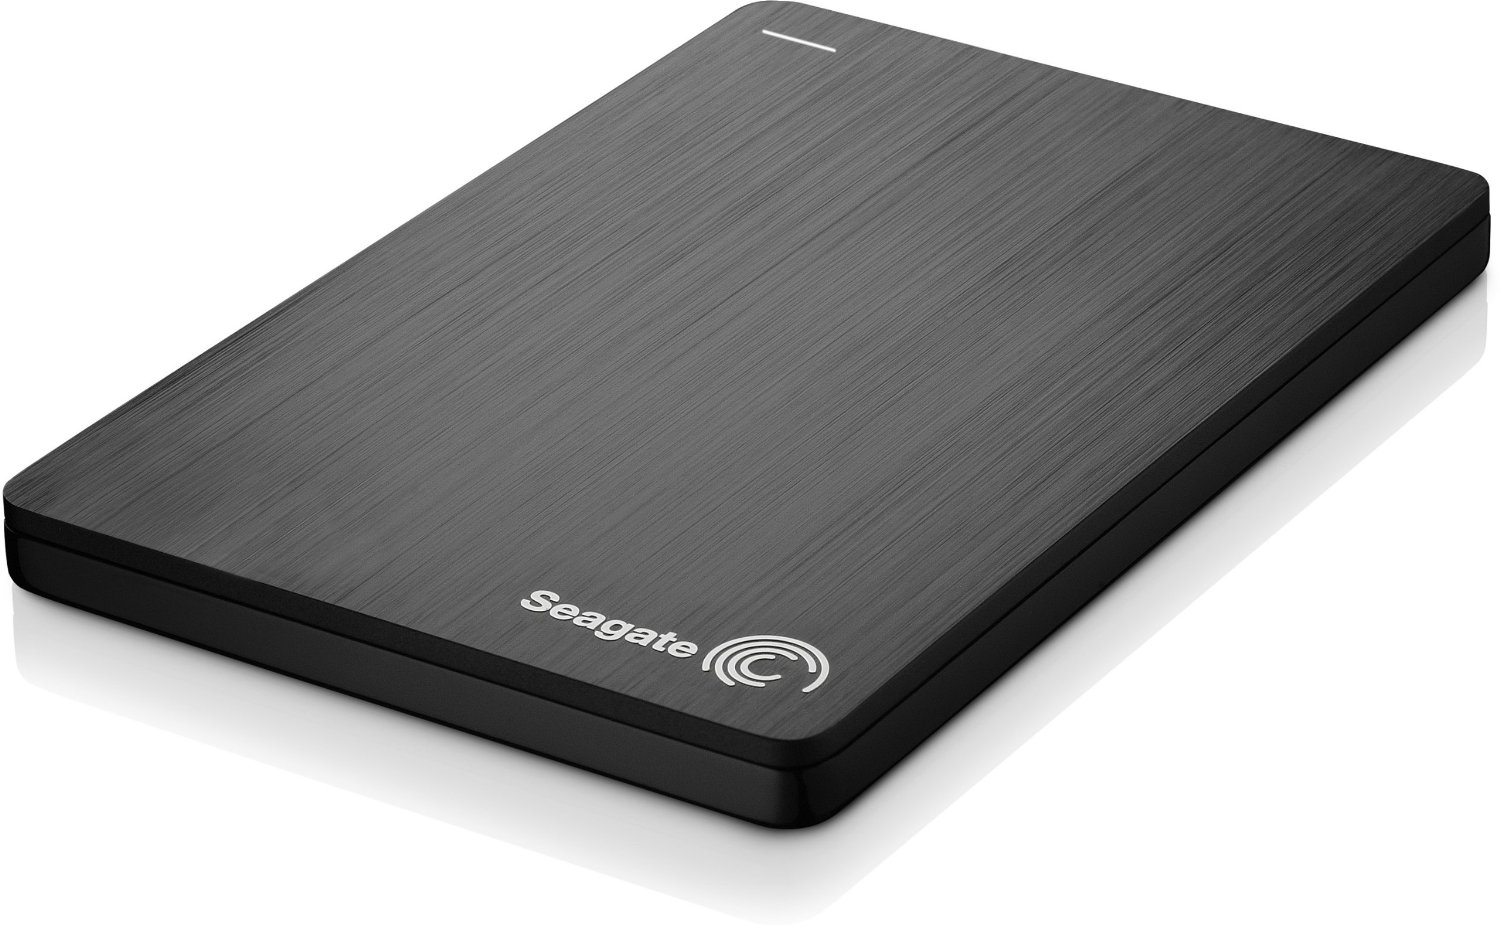 Видит переносной жесткий. Seagate 500gb внешний жесткий диск. Внешний HDD Seagate Slim Portable Drive 500 ГБ. Внешний жесткий диск Seagate 2.5. Seagate Slim stcd500202.